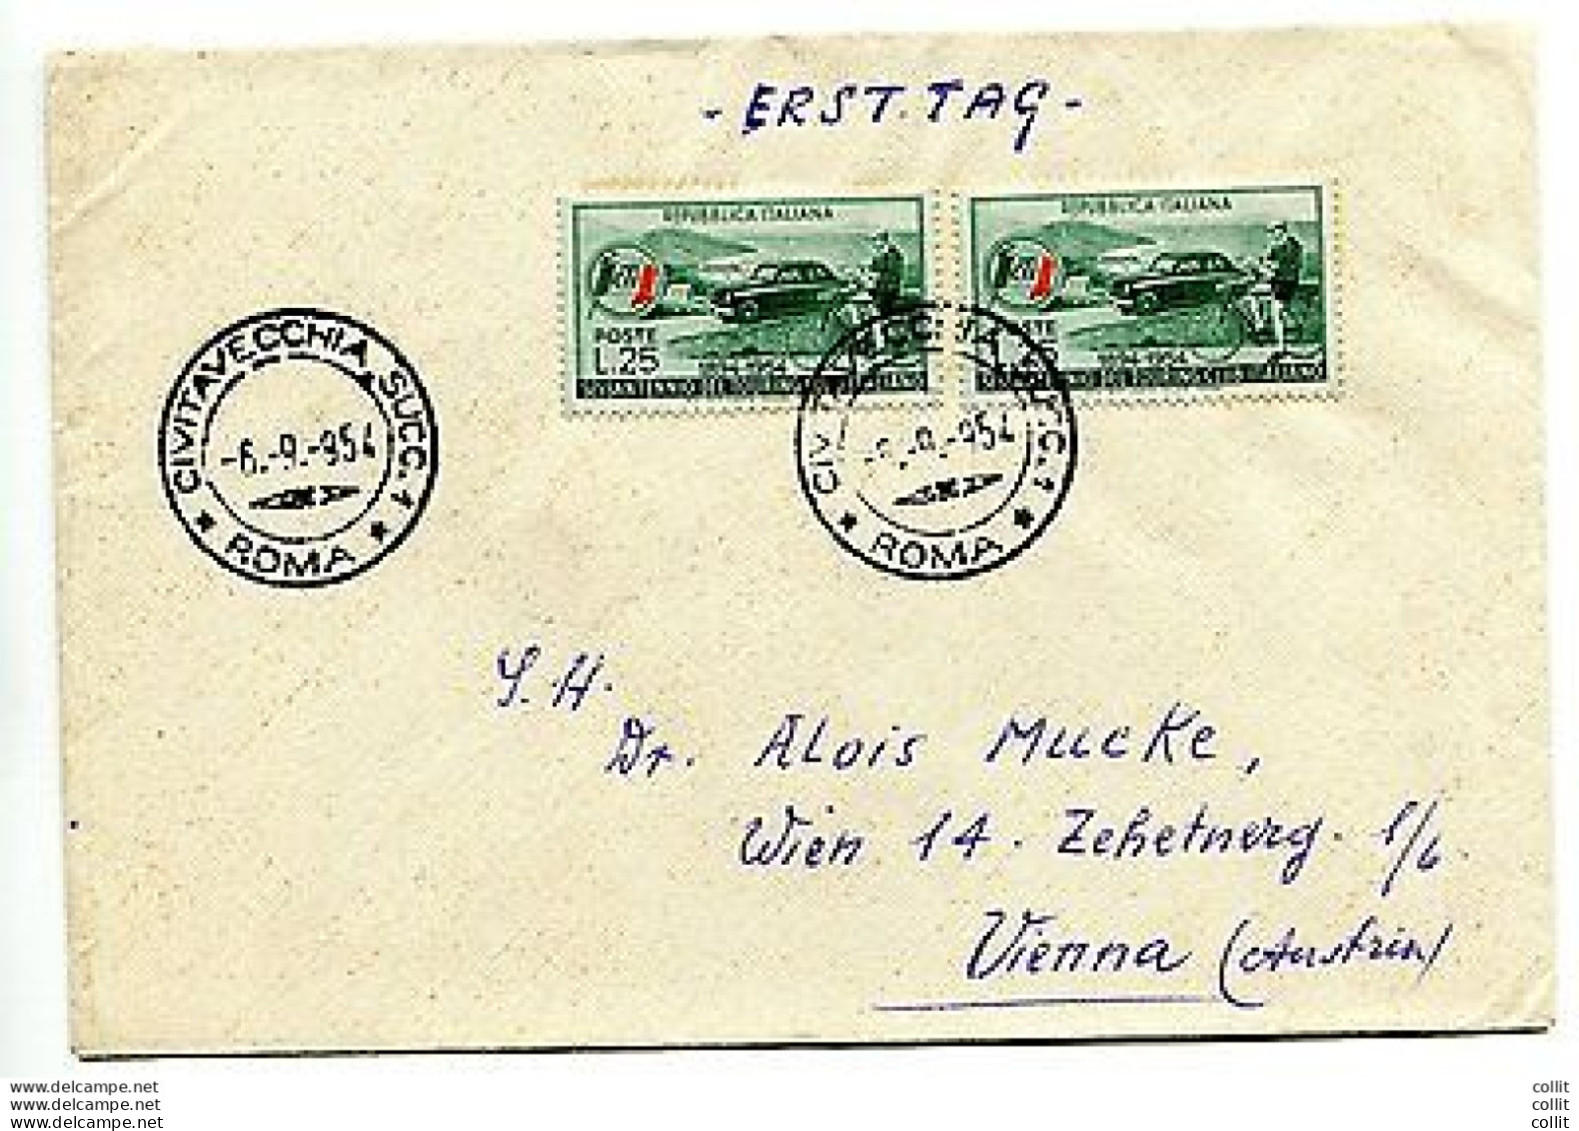 Touring Due Esemplari + Complementare Su Busta Per L'Austria - 1946-60: Marcofilie